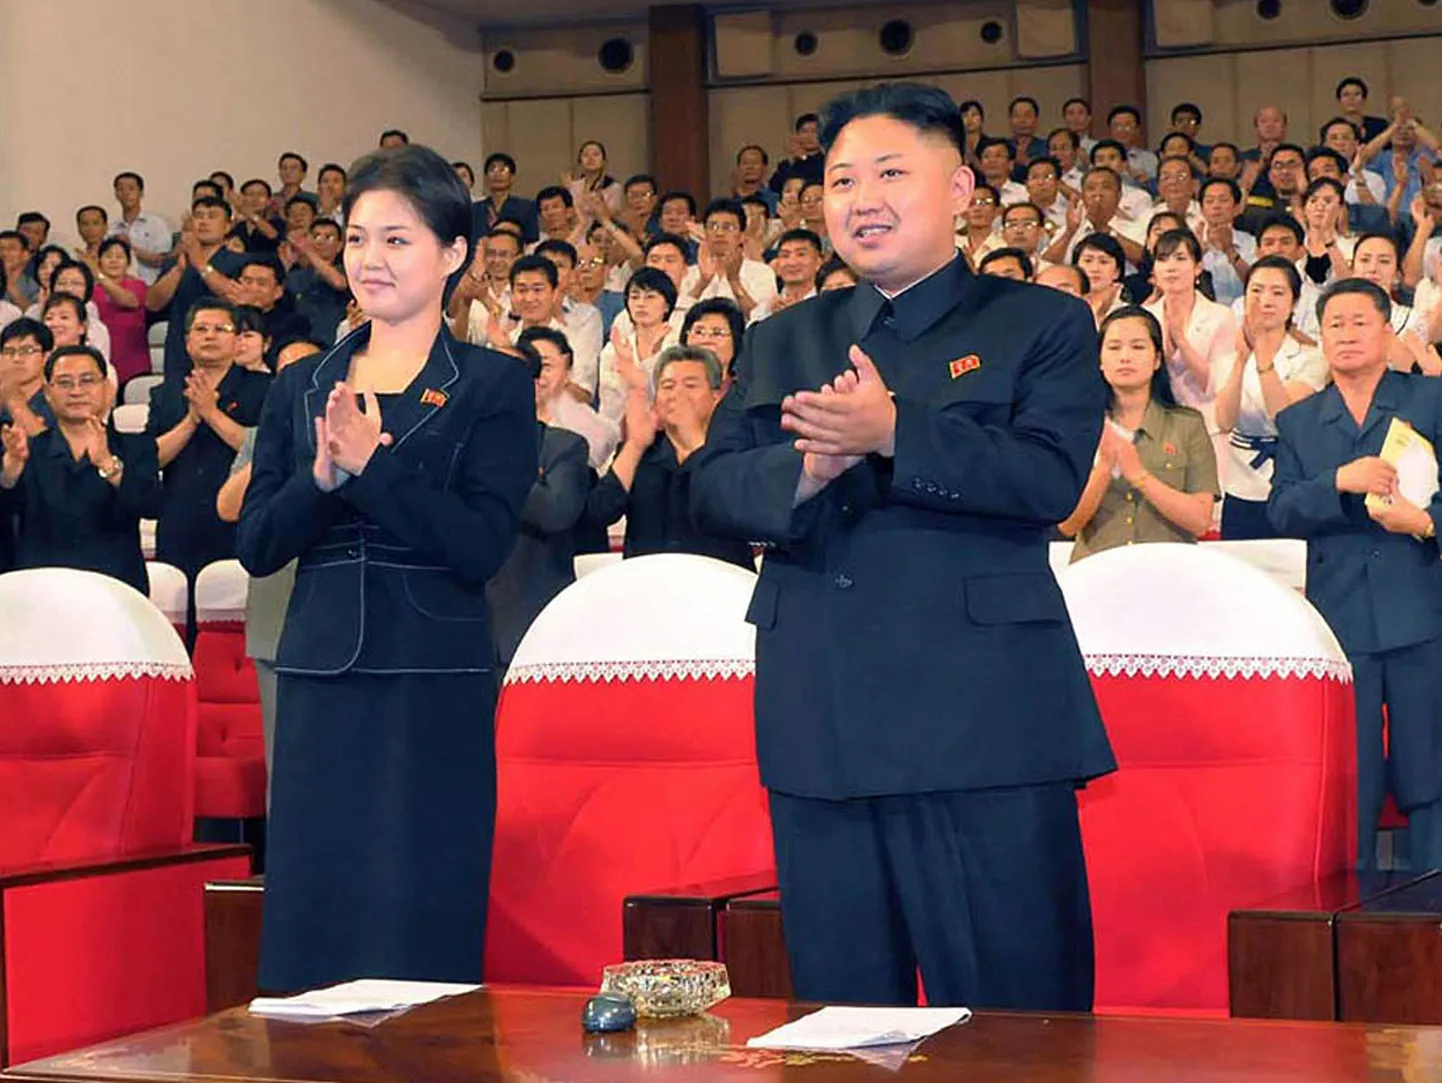 Kim Jong-un ja salapärane naine, kes võib olla lauljanna Hyon Song-wol